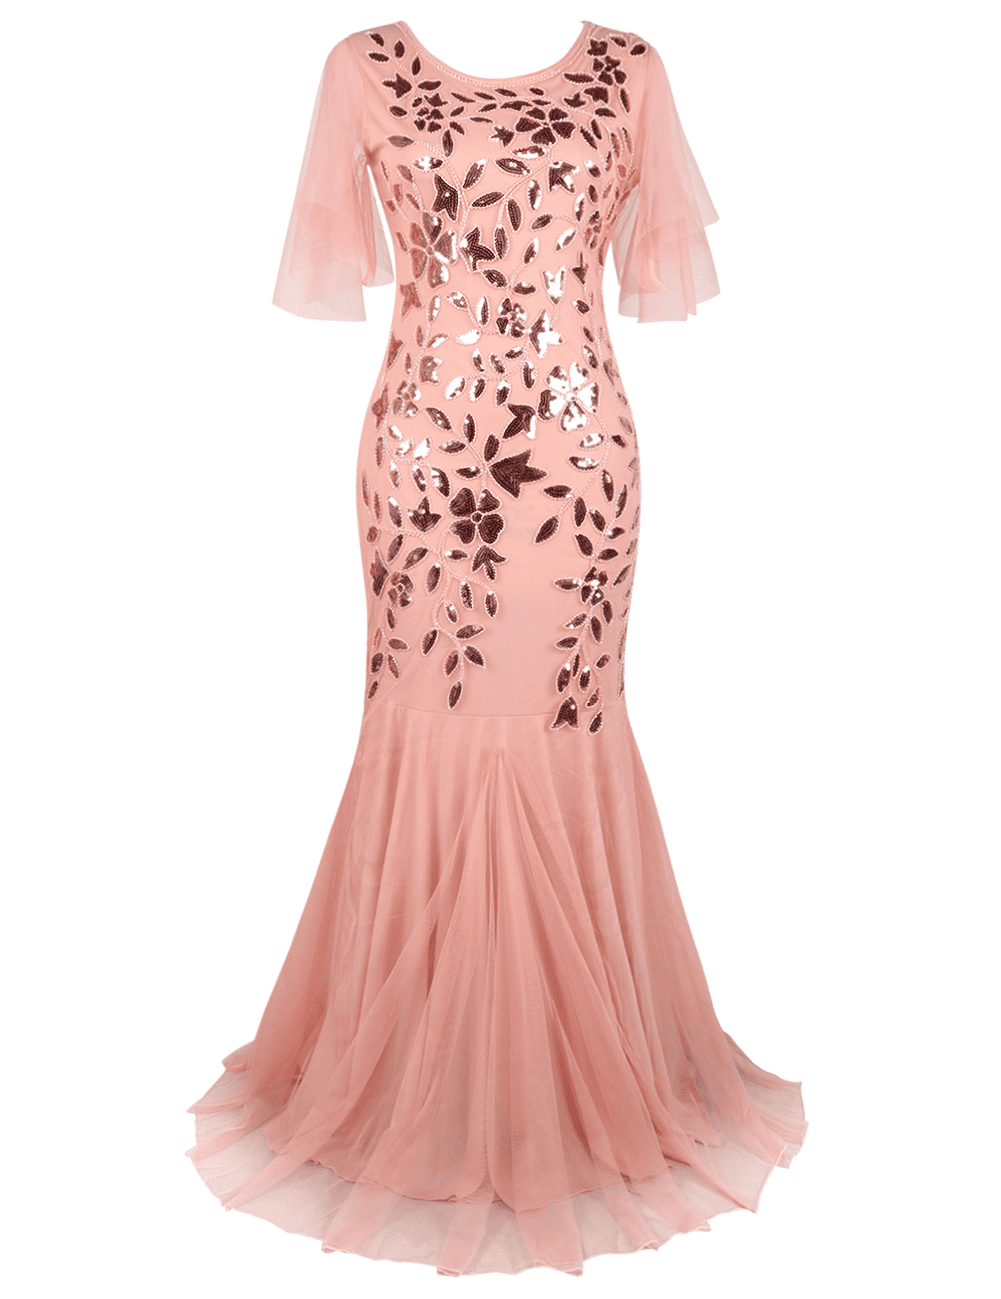 Details about   Dance Costume Hot Pink Black Sequin trim Faux sequin body RUFFLES Child sizes 